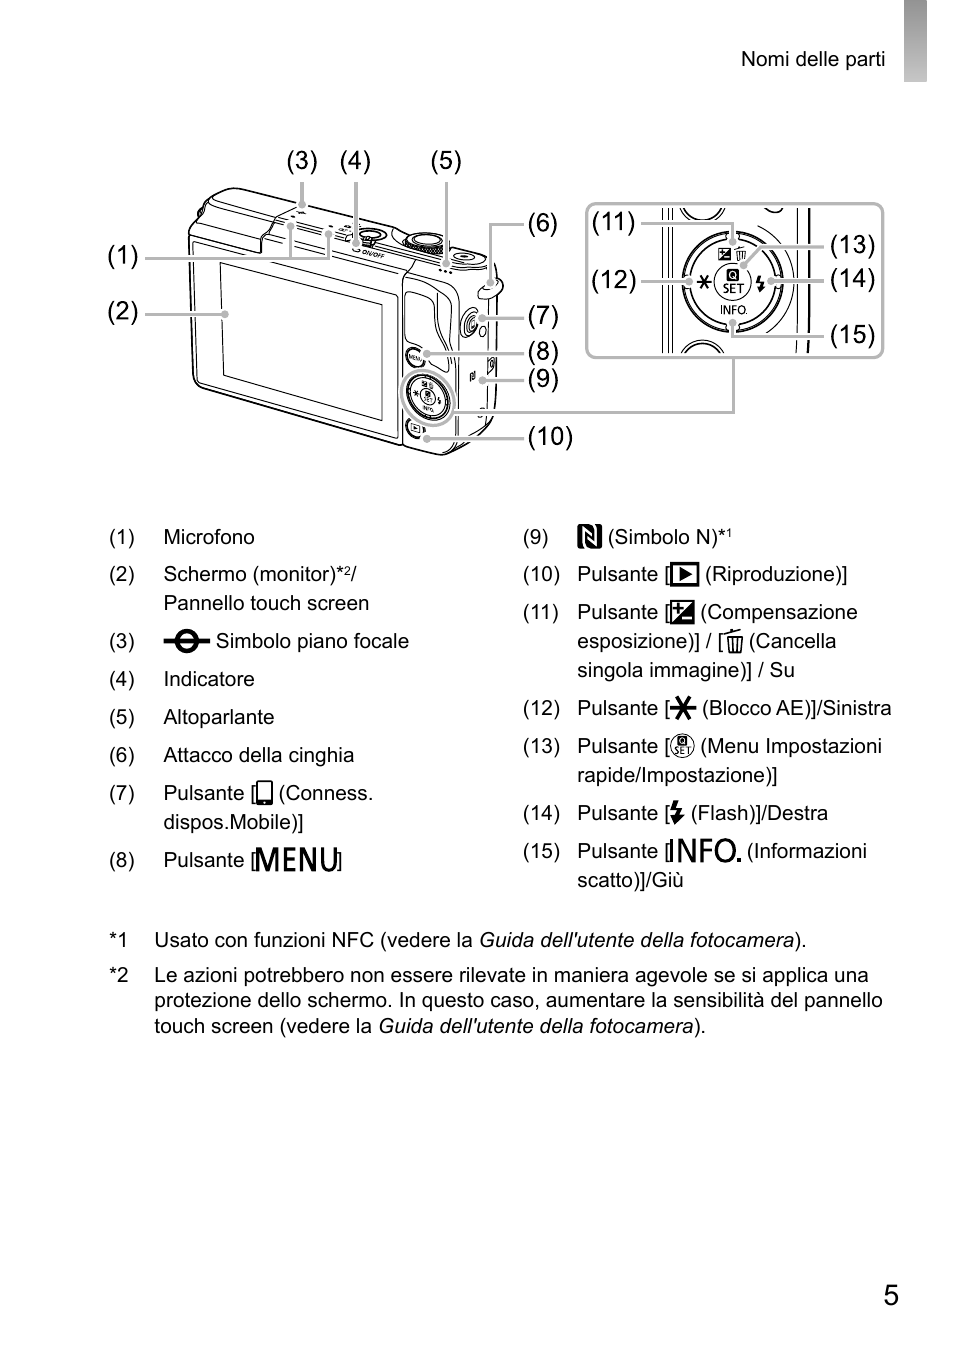 Canon EOS M10 Manuale d'uso | Pagina 5 / 21